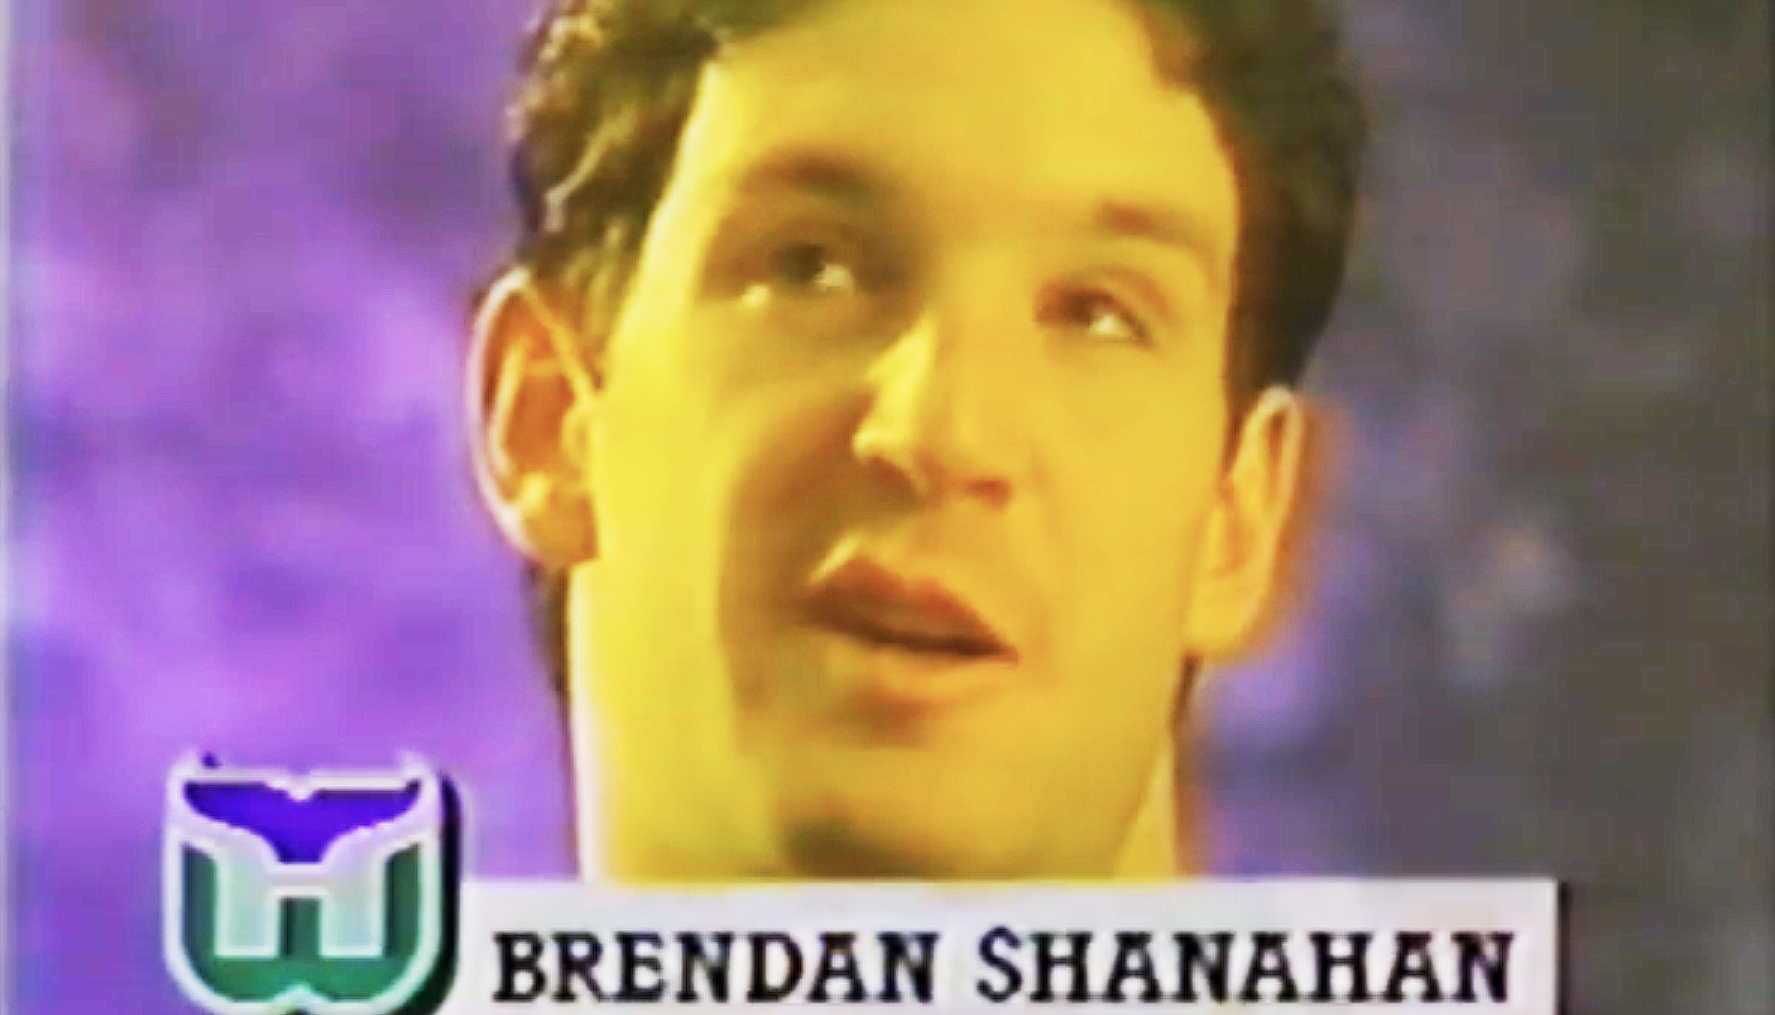 Brendan-Shanahan;-The-Beatles;-NHL